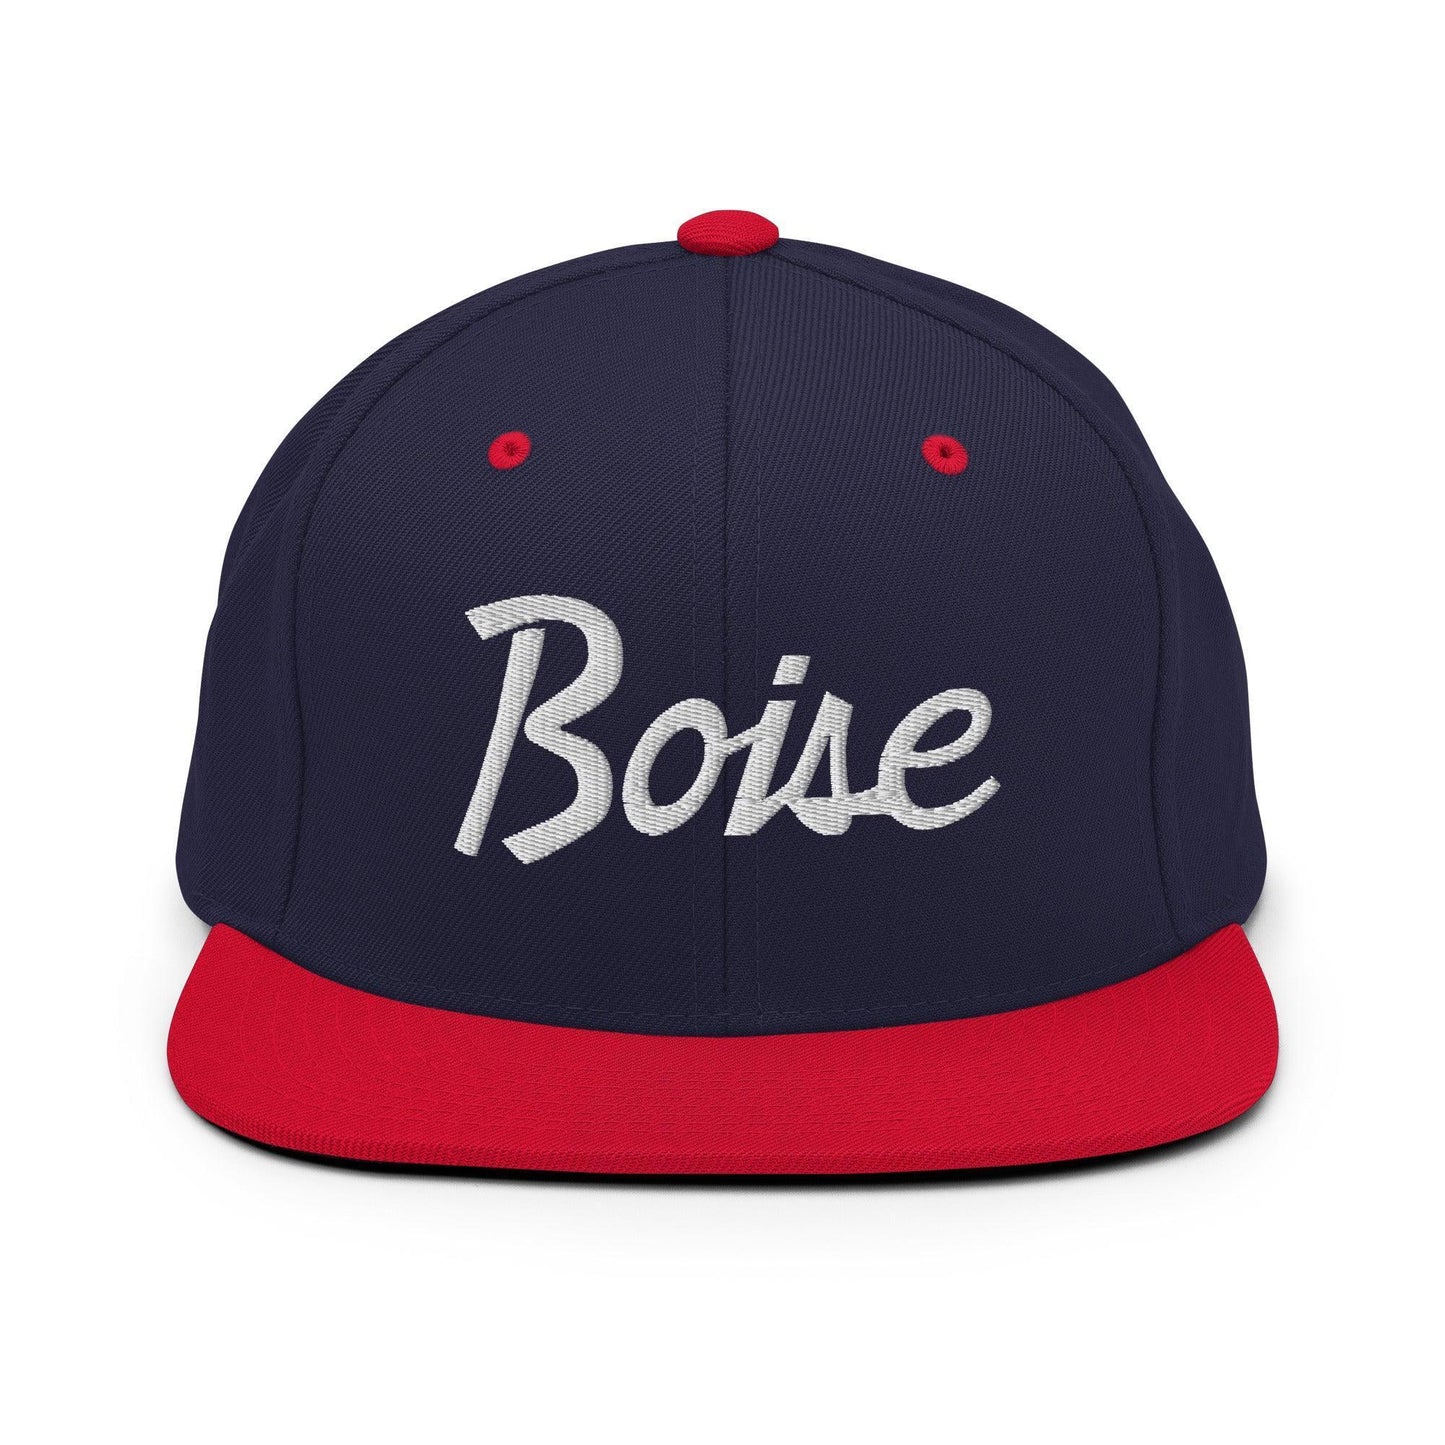 Boise Script Snapback Hat Navy Red